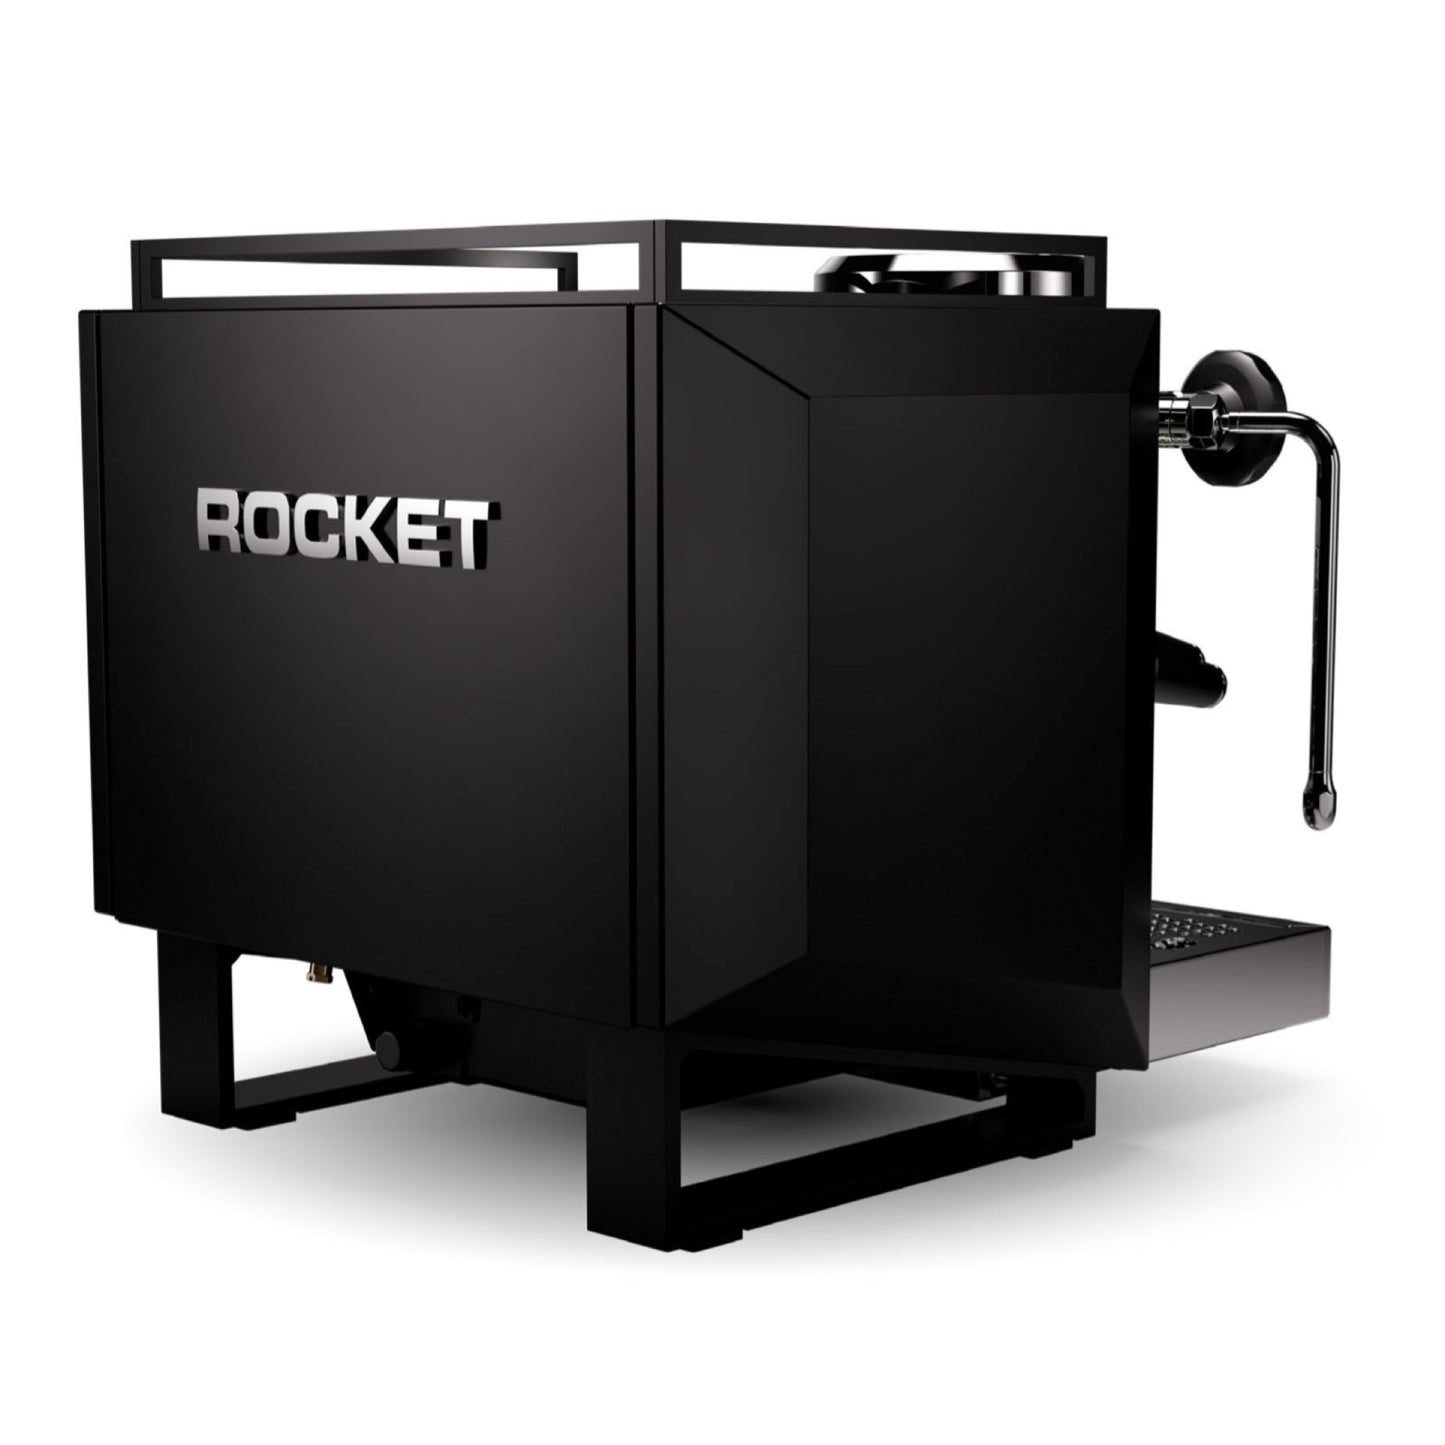 Rocket Coffee machine Bicocca